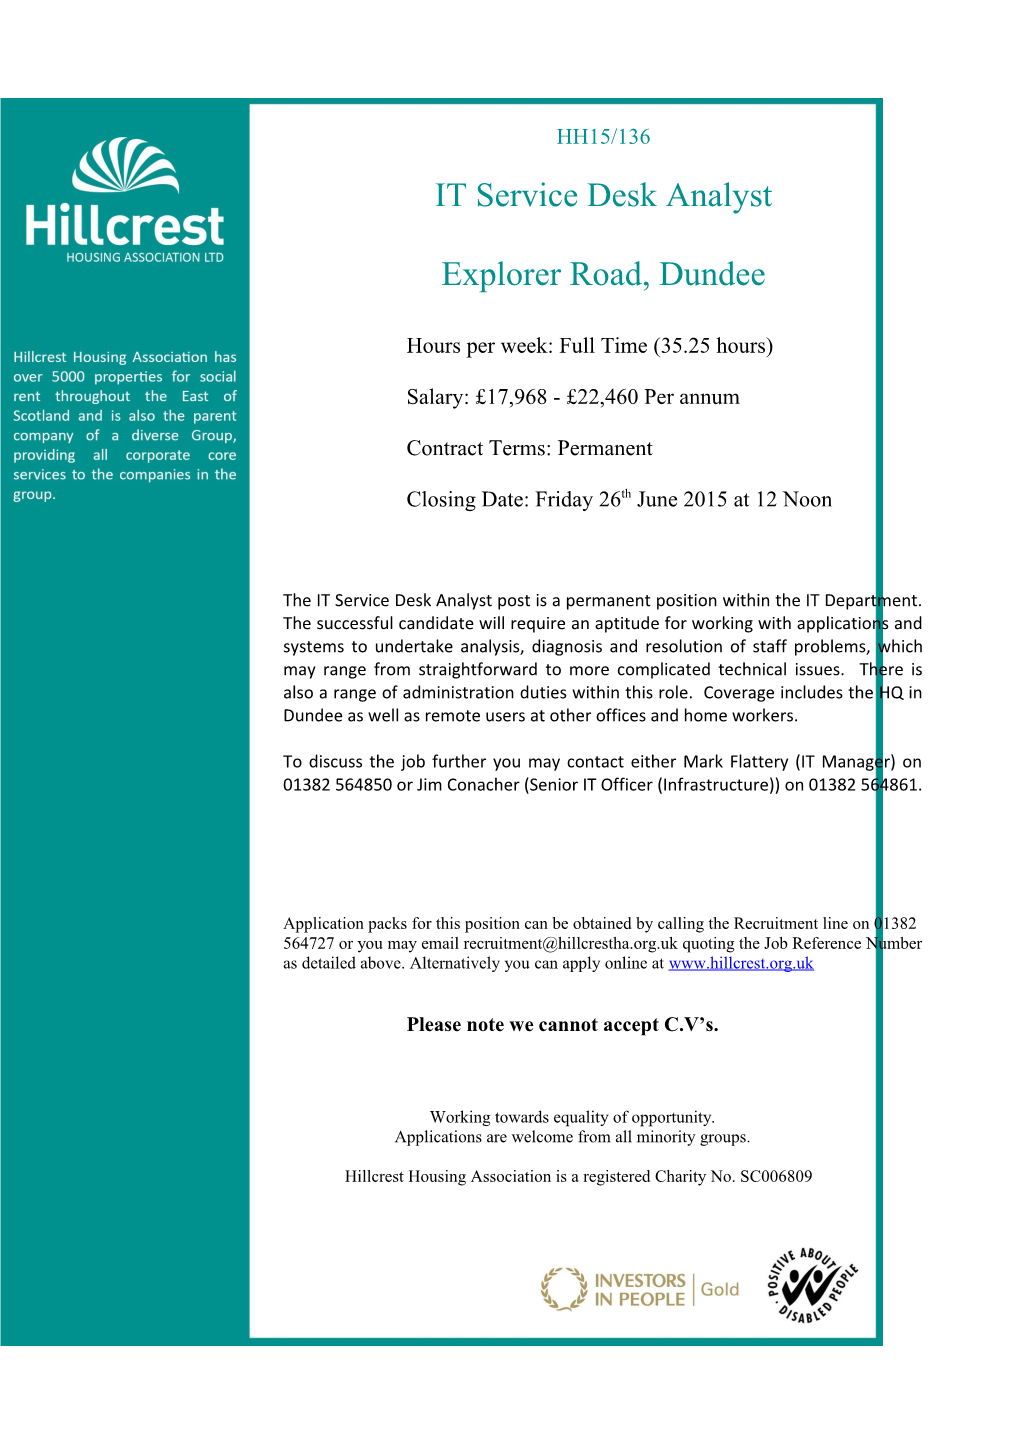 Hillcrest Housing Association Limited